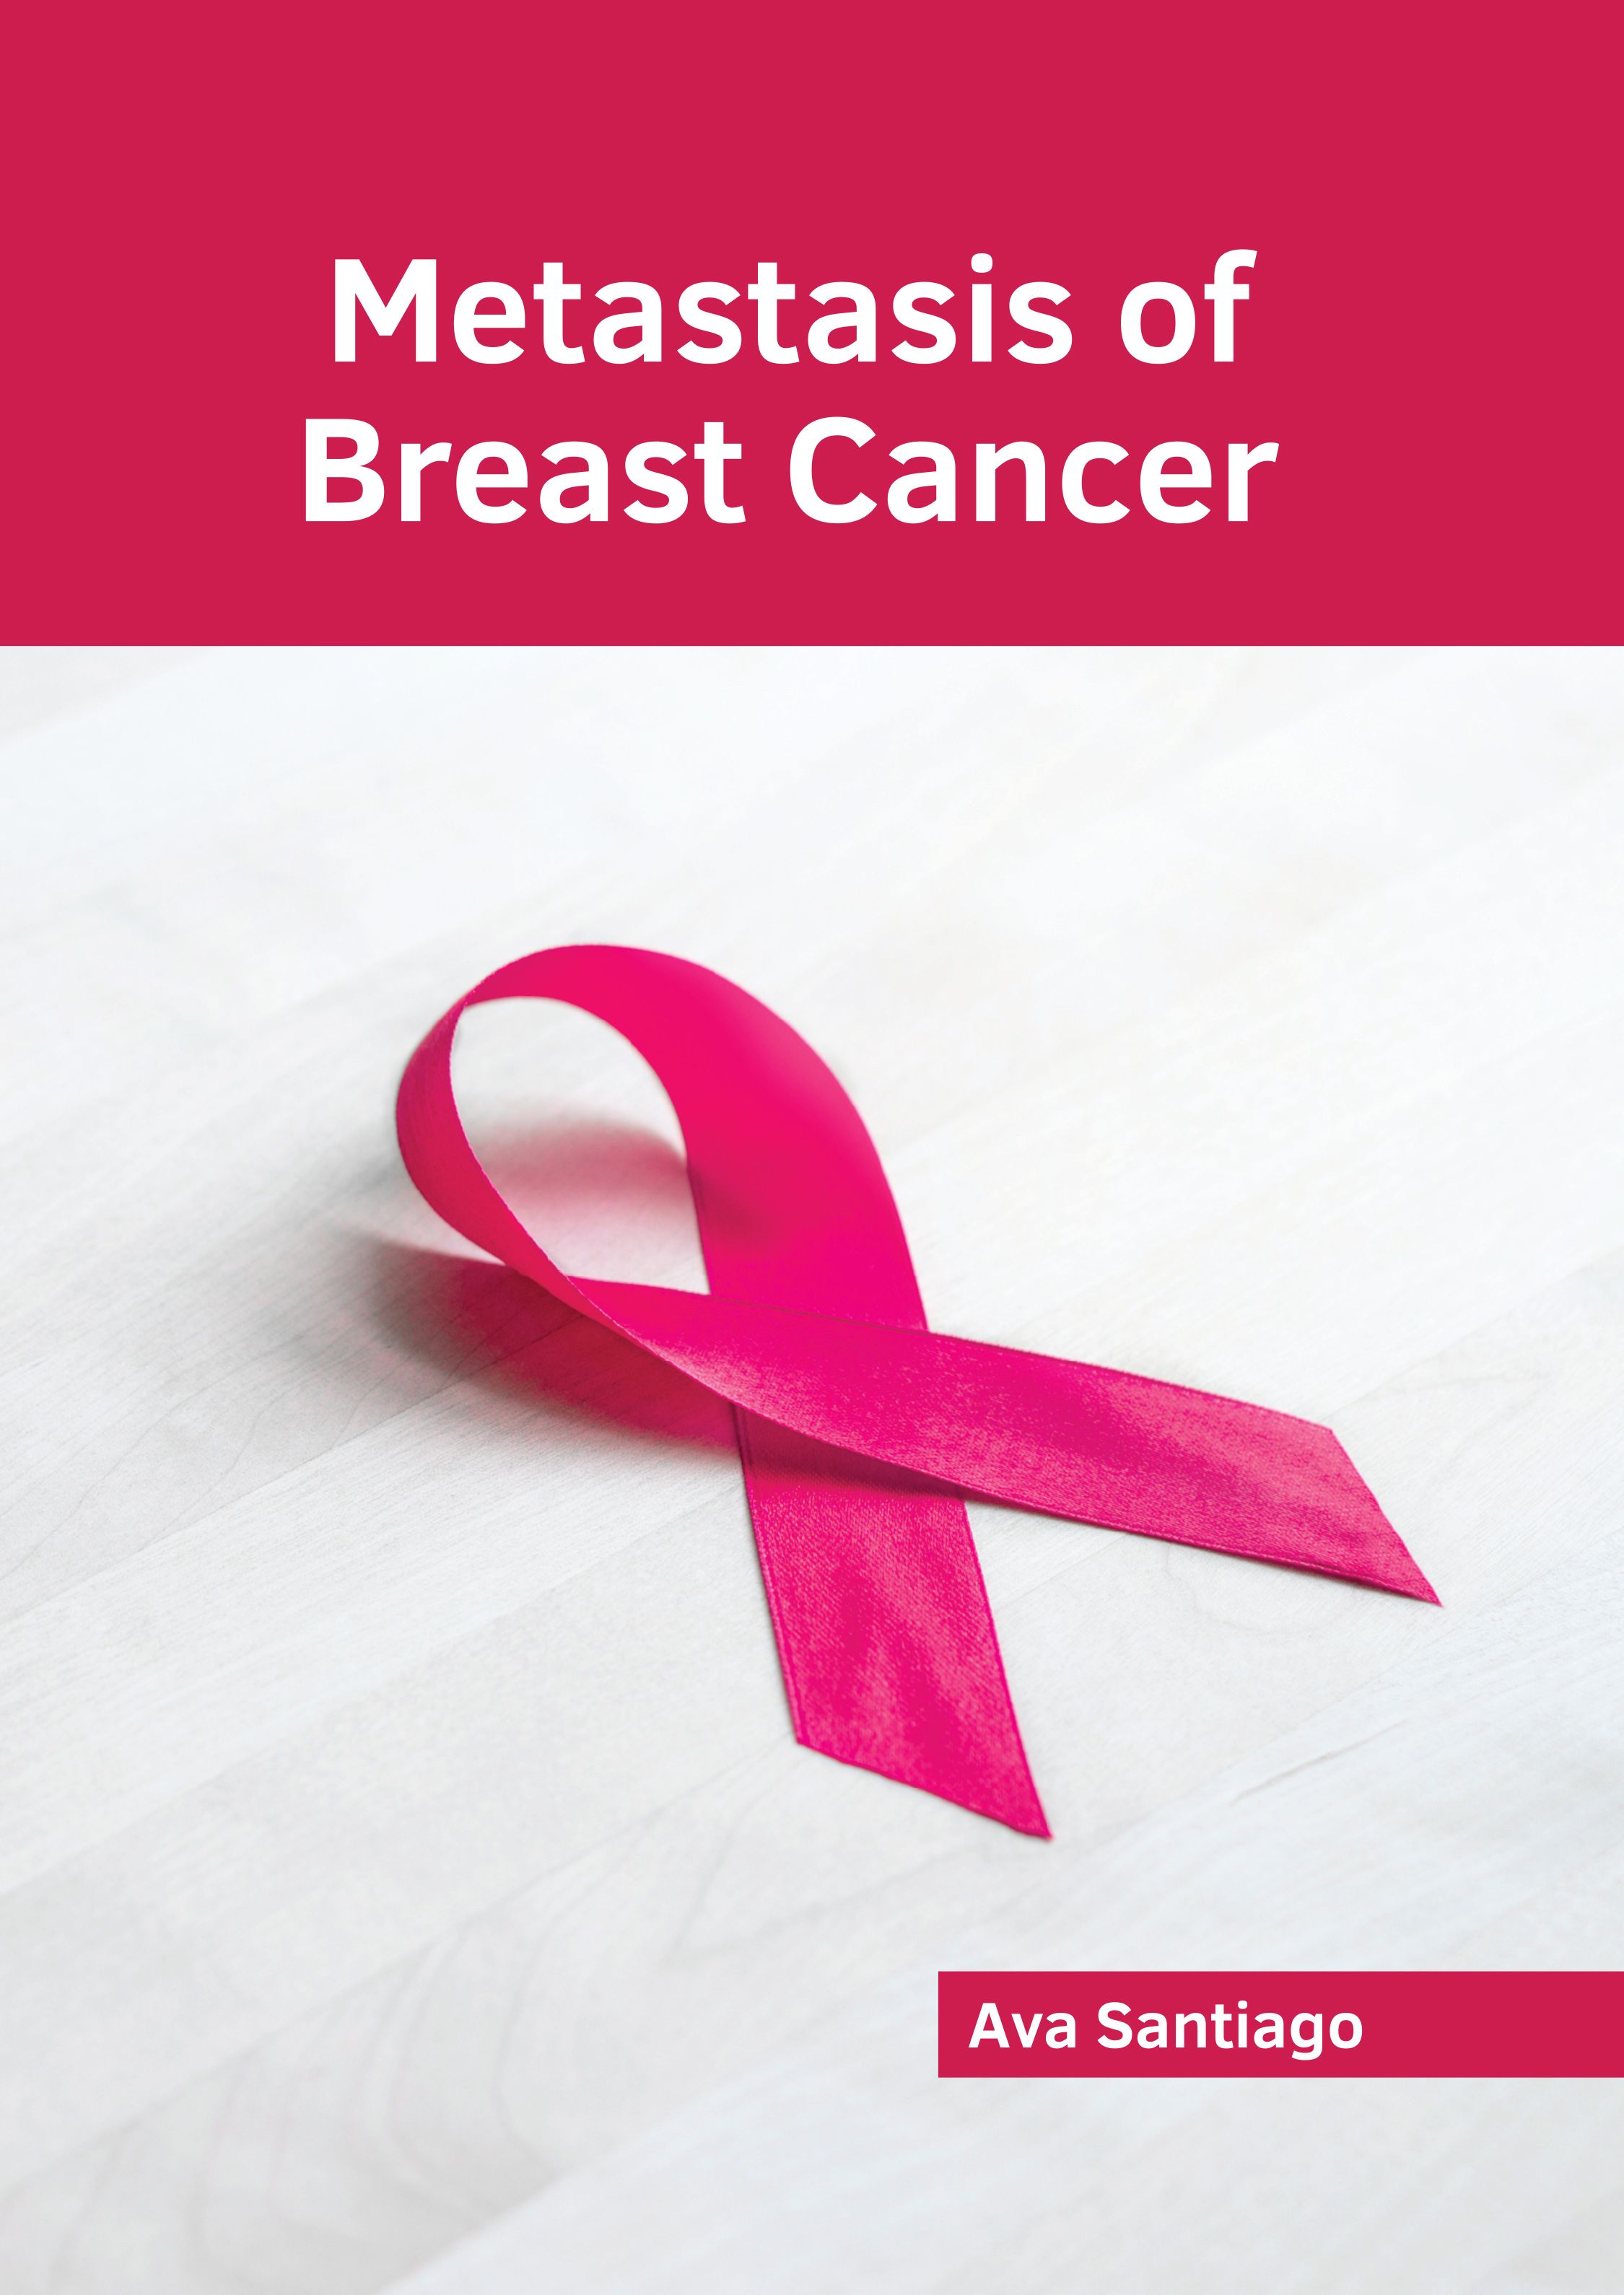 METASTASIS OF BREAST CANCER